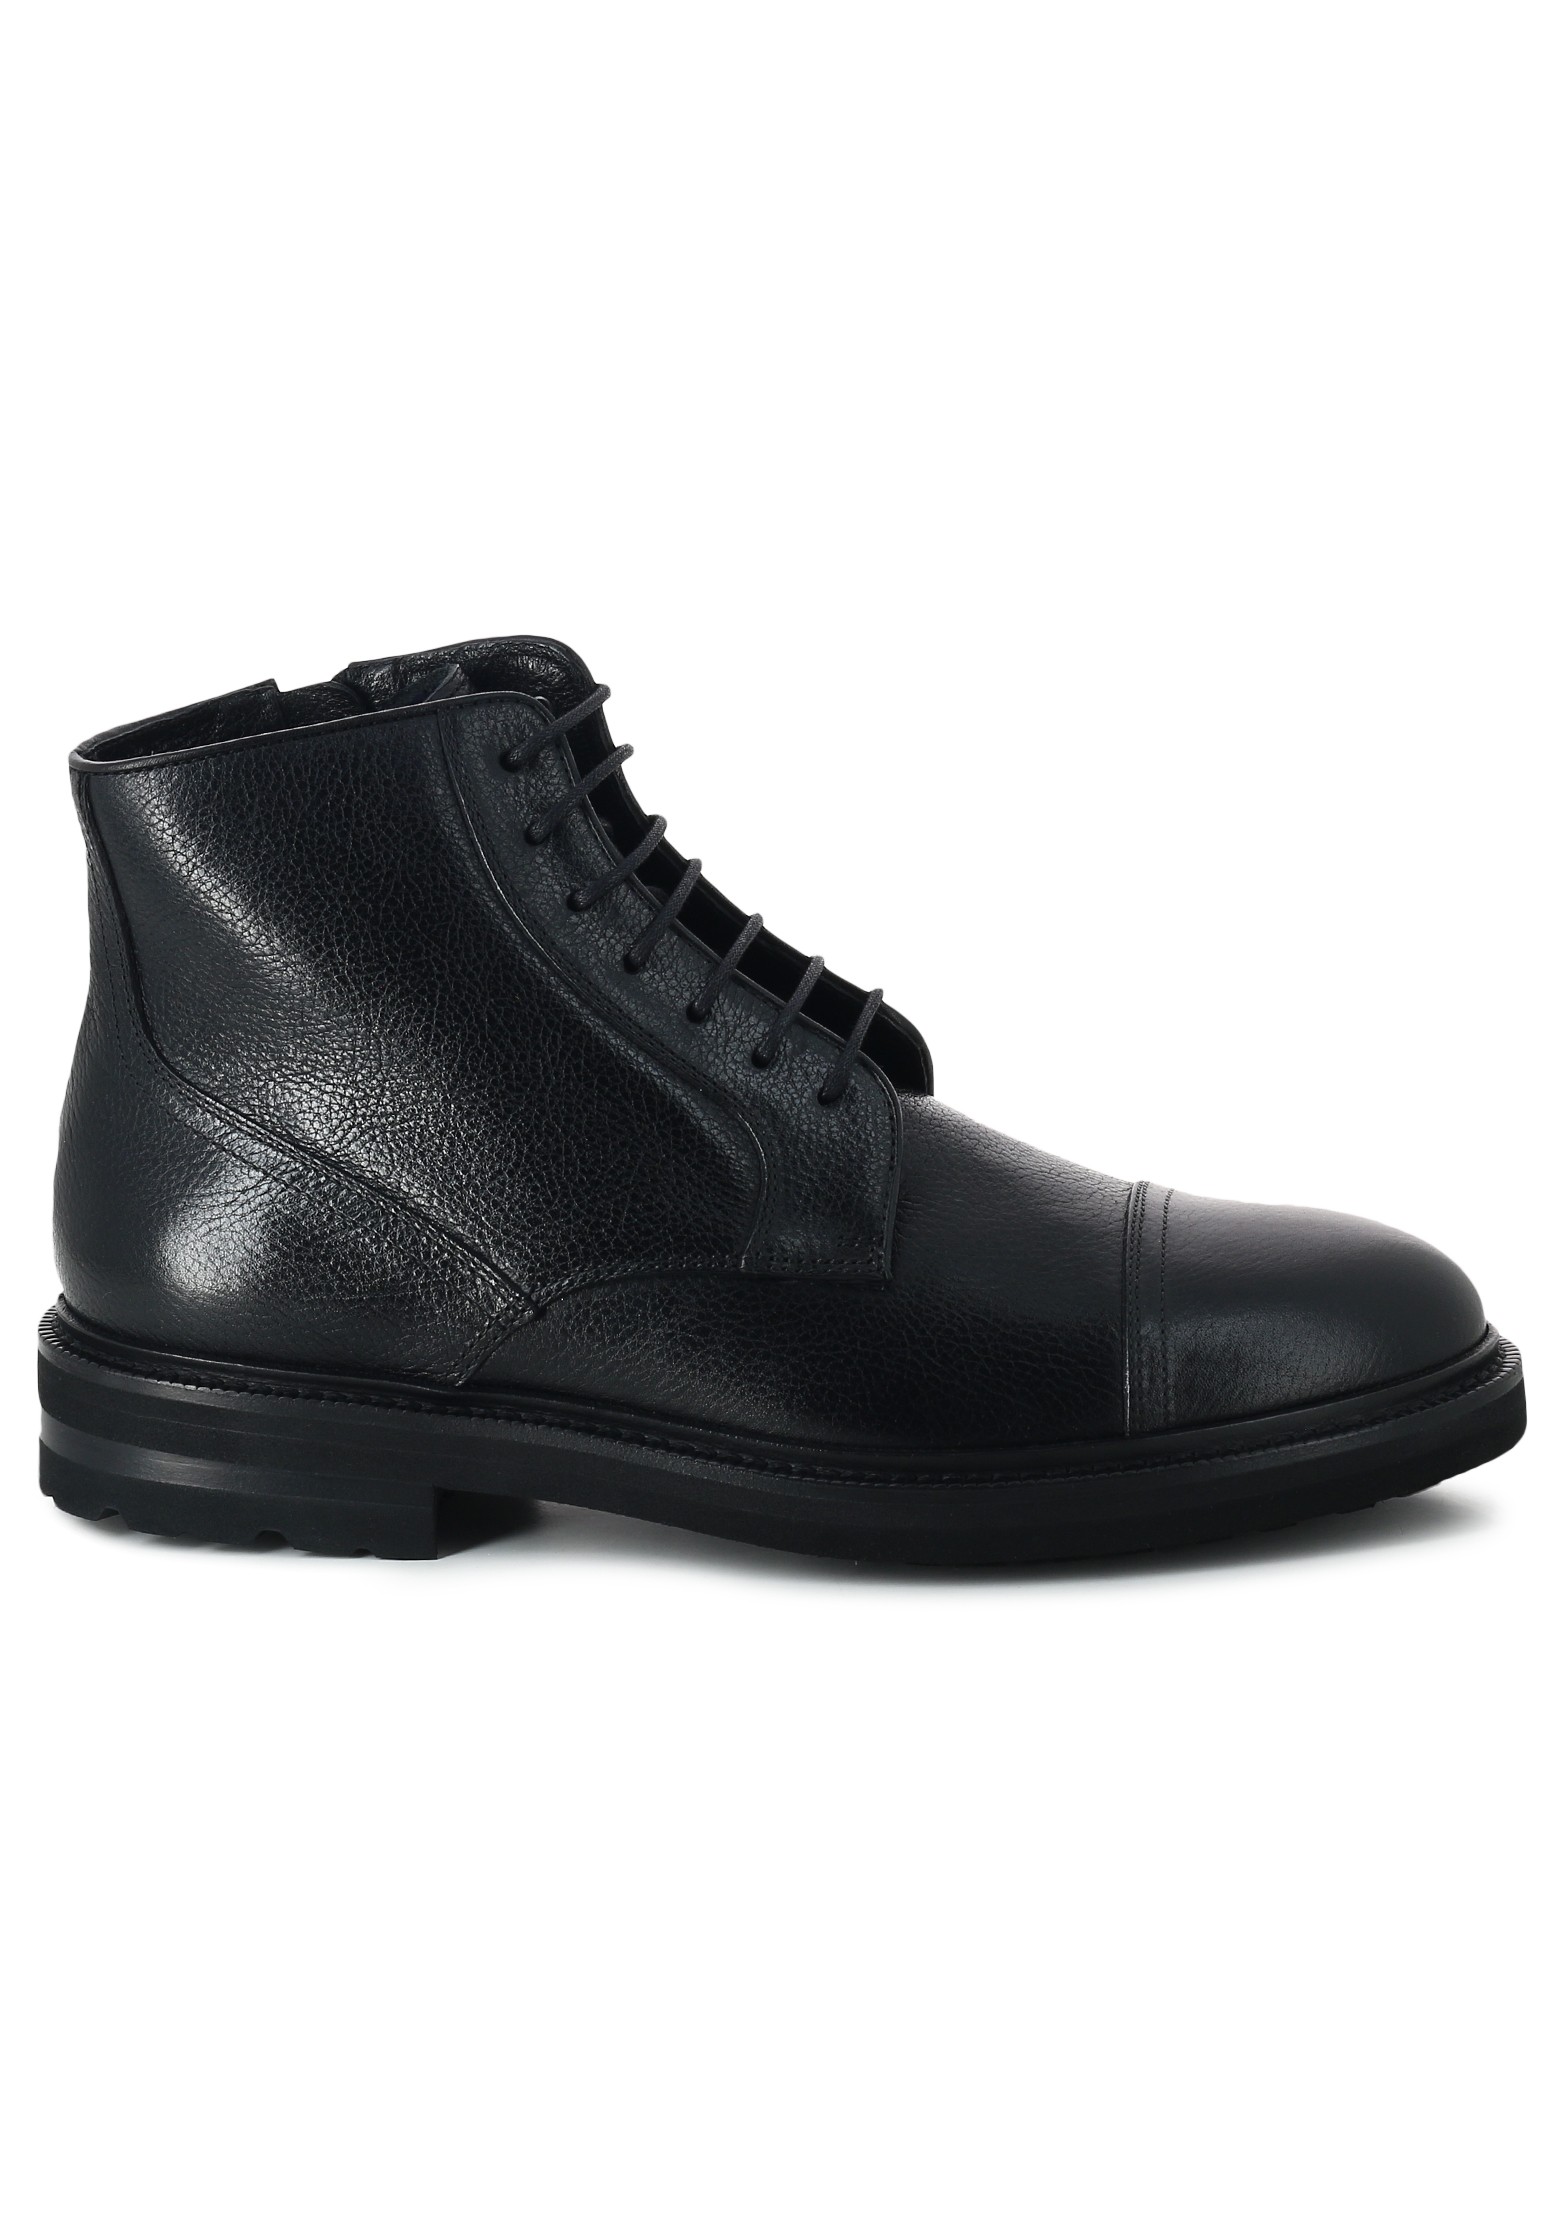 Ботинки HENDERSON Черный, размер 41.5 131474 - фото 1